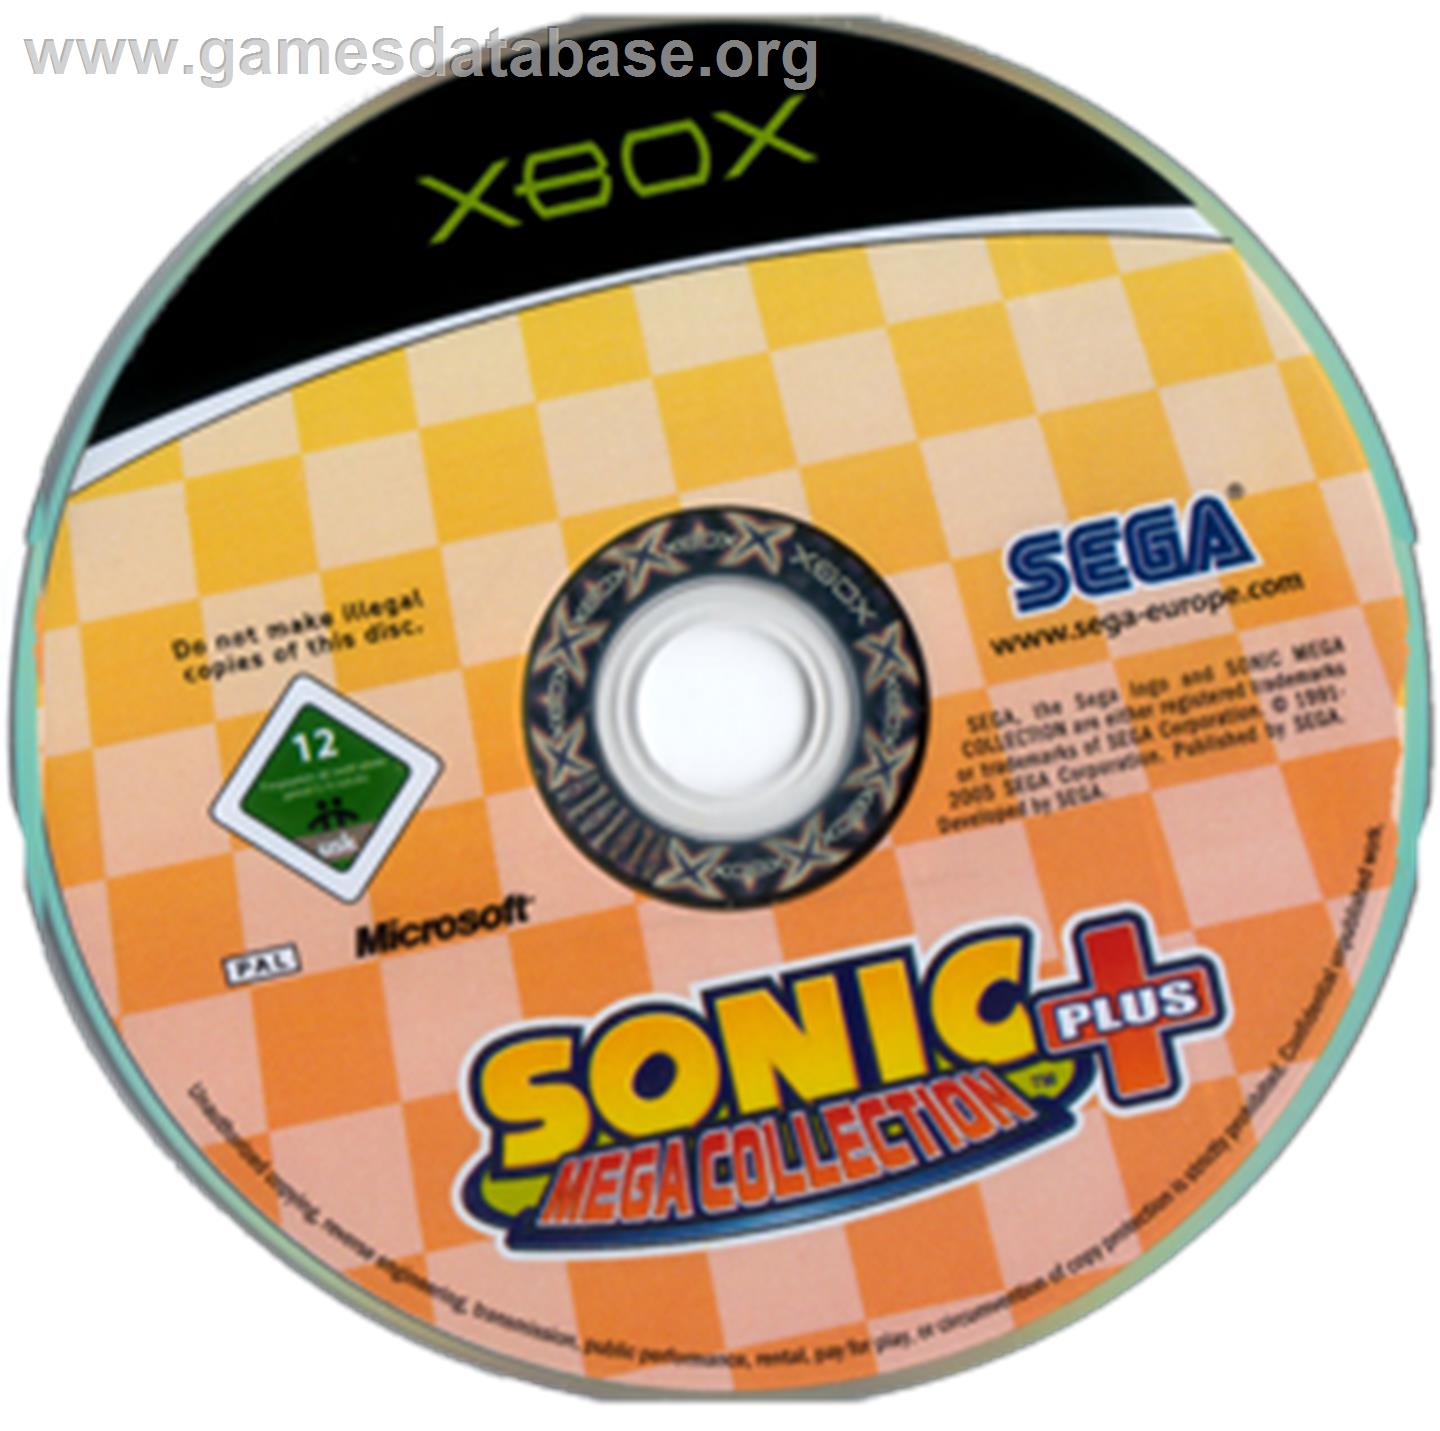 Sonic Mega Collection Plus - Microsoft Xbox - Artwork - CD